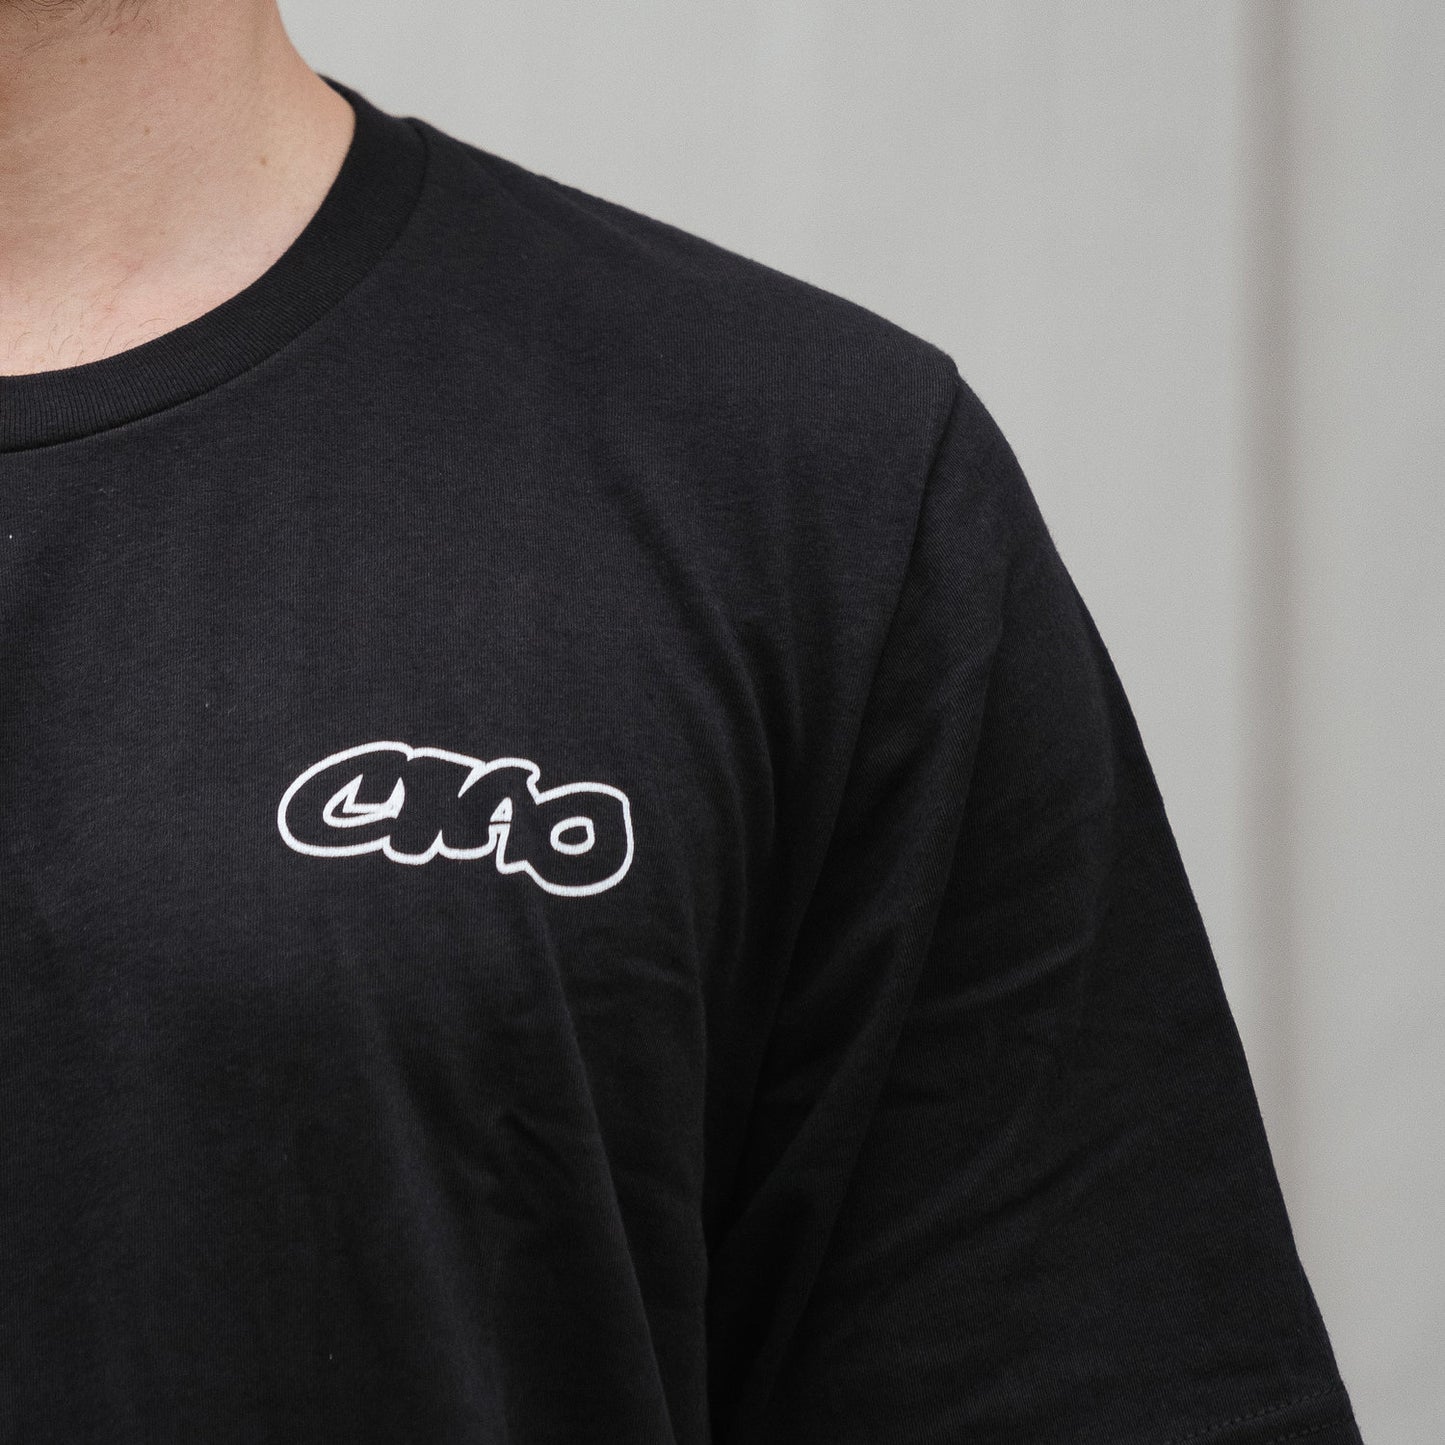 CIAO - Fake News T-Shirt/Black